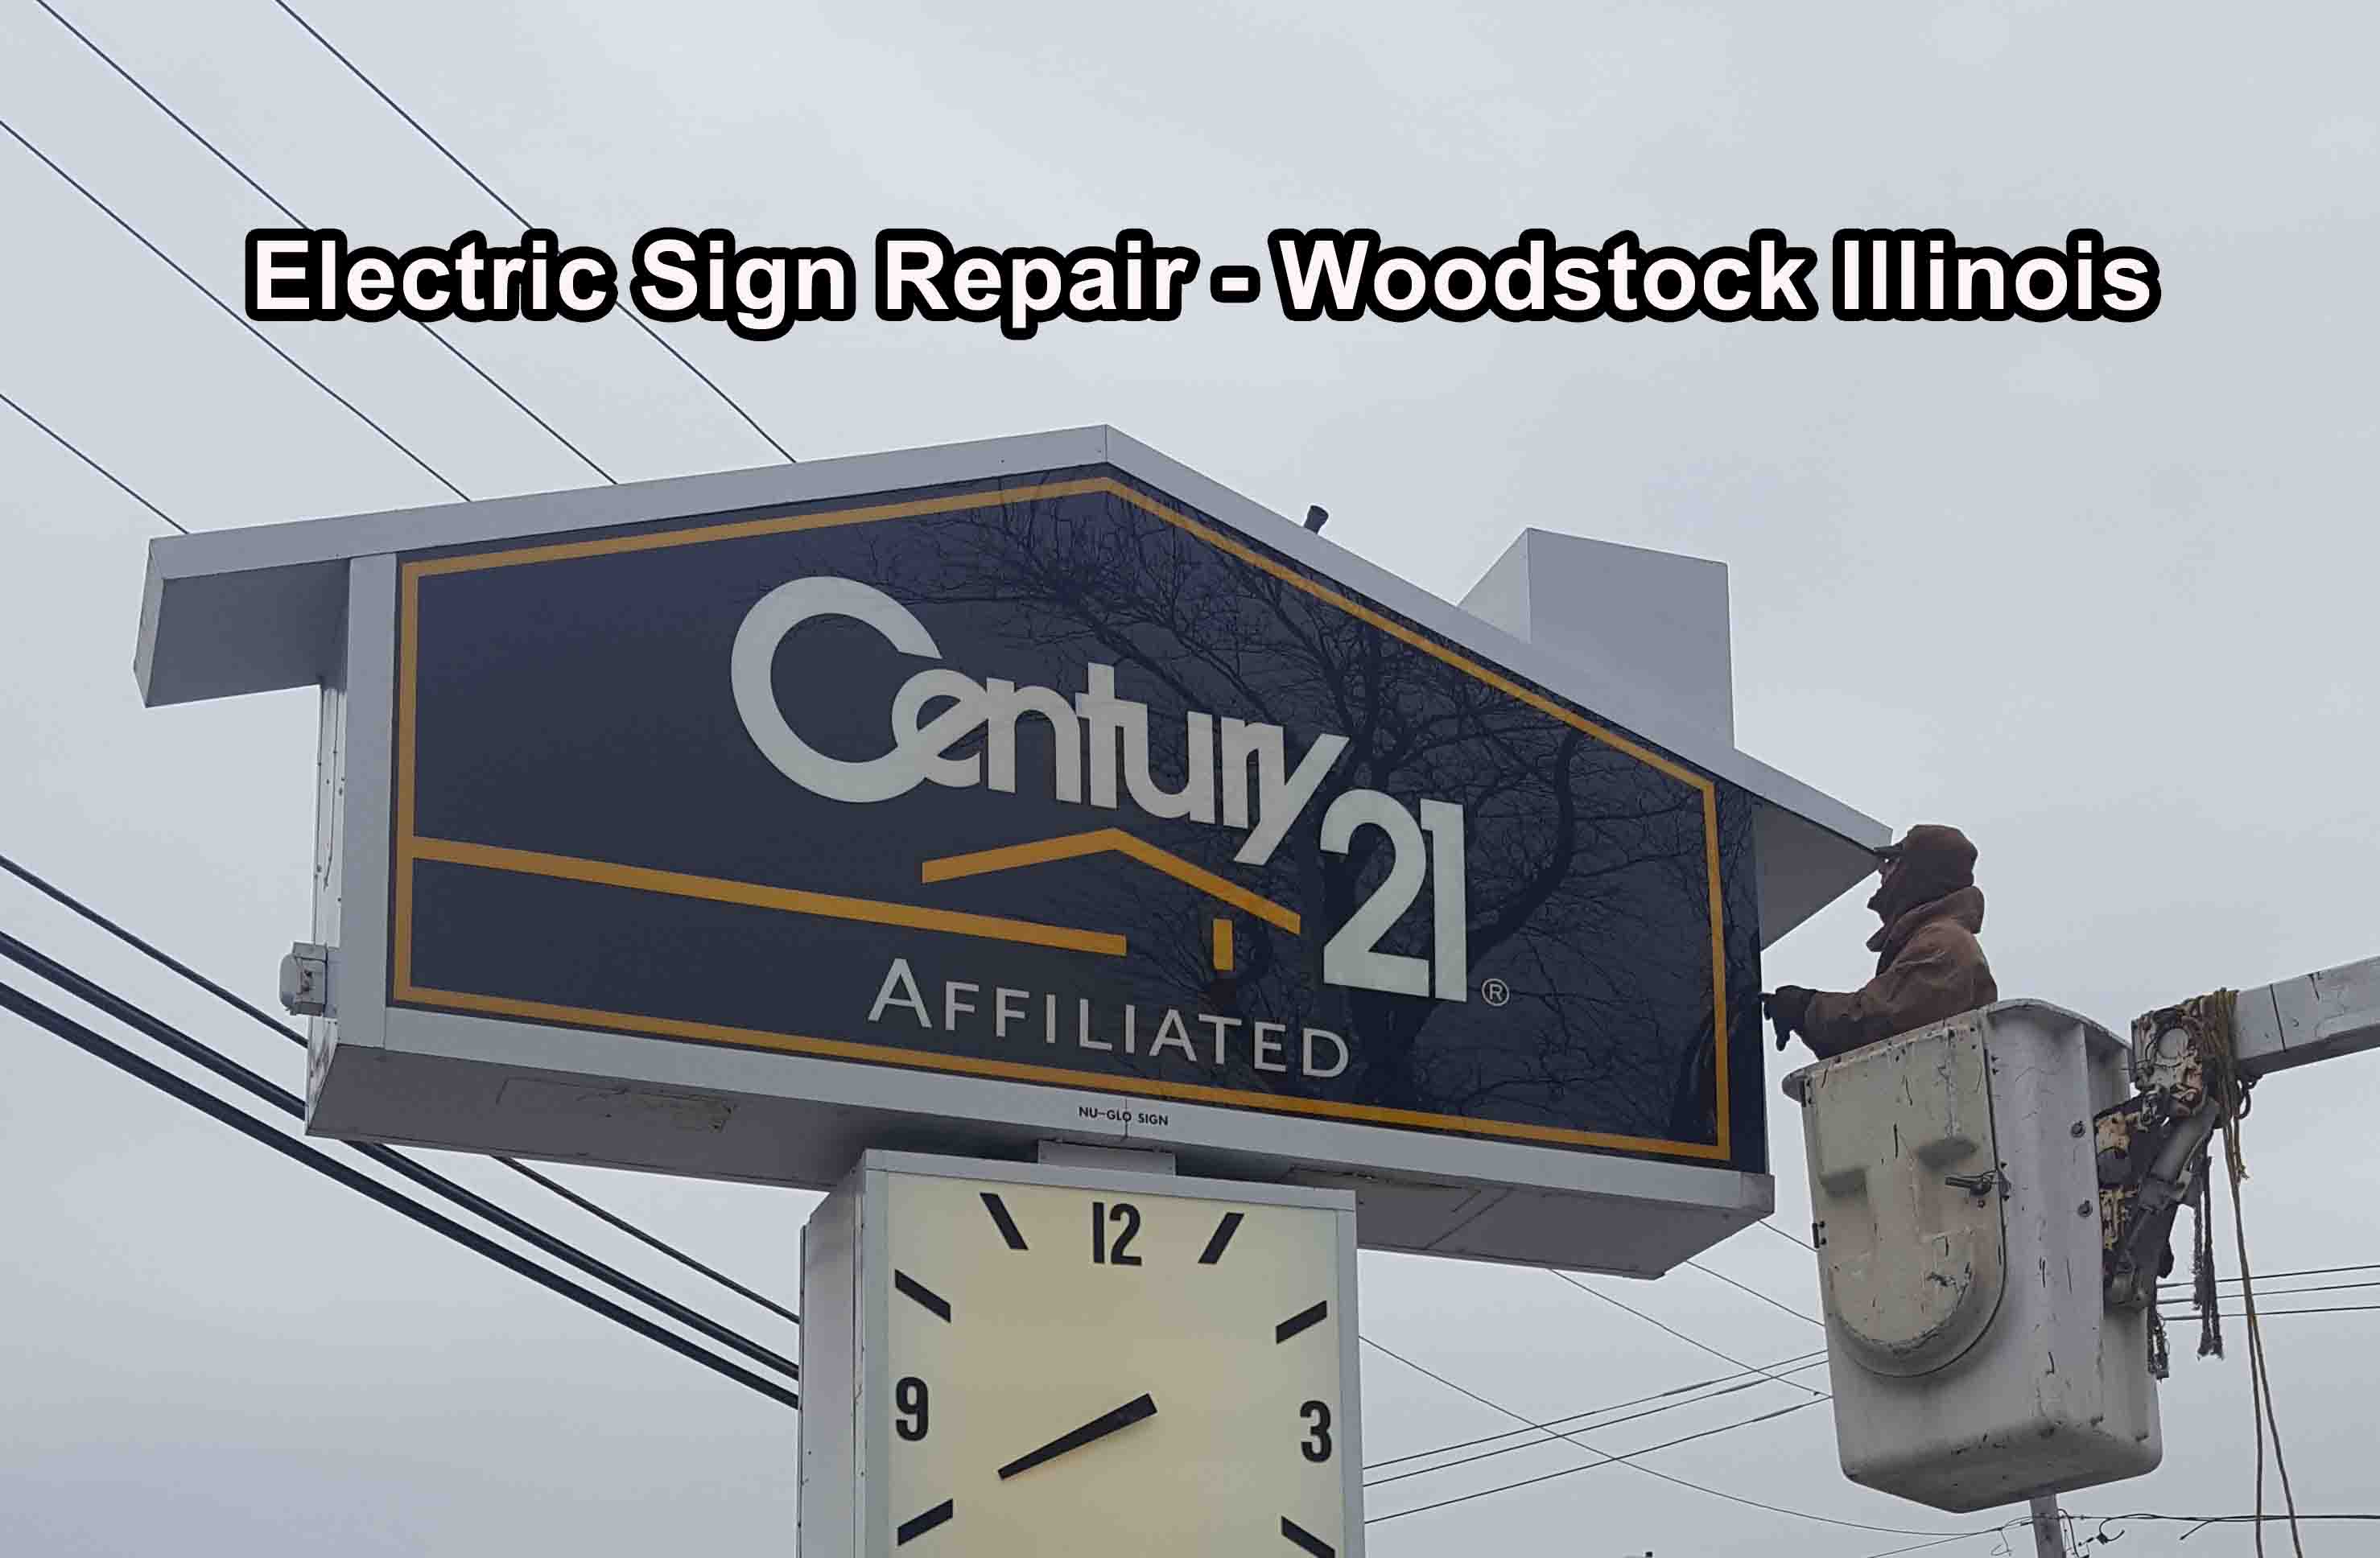 Electric Sign Repair - Woodstock Illinois